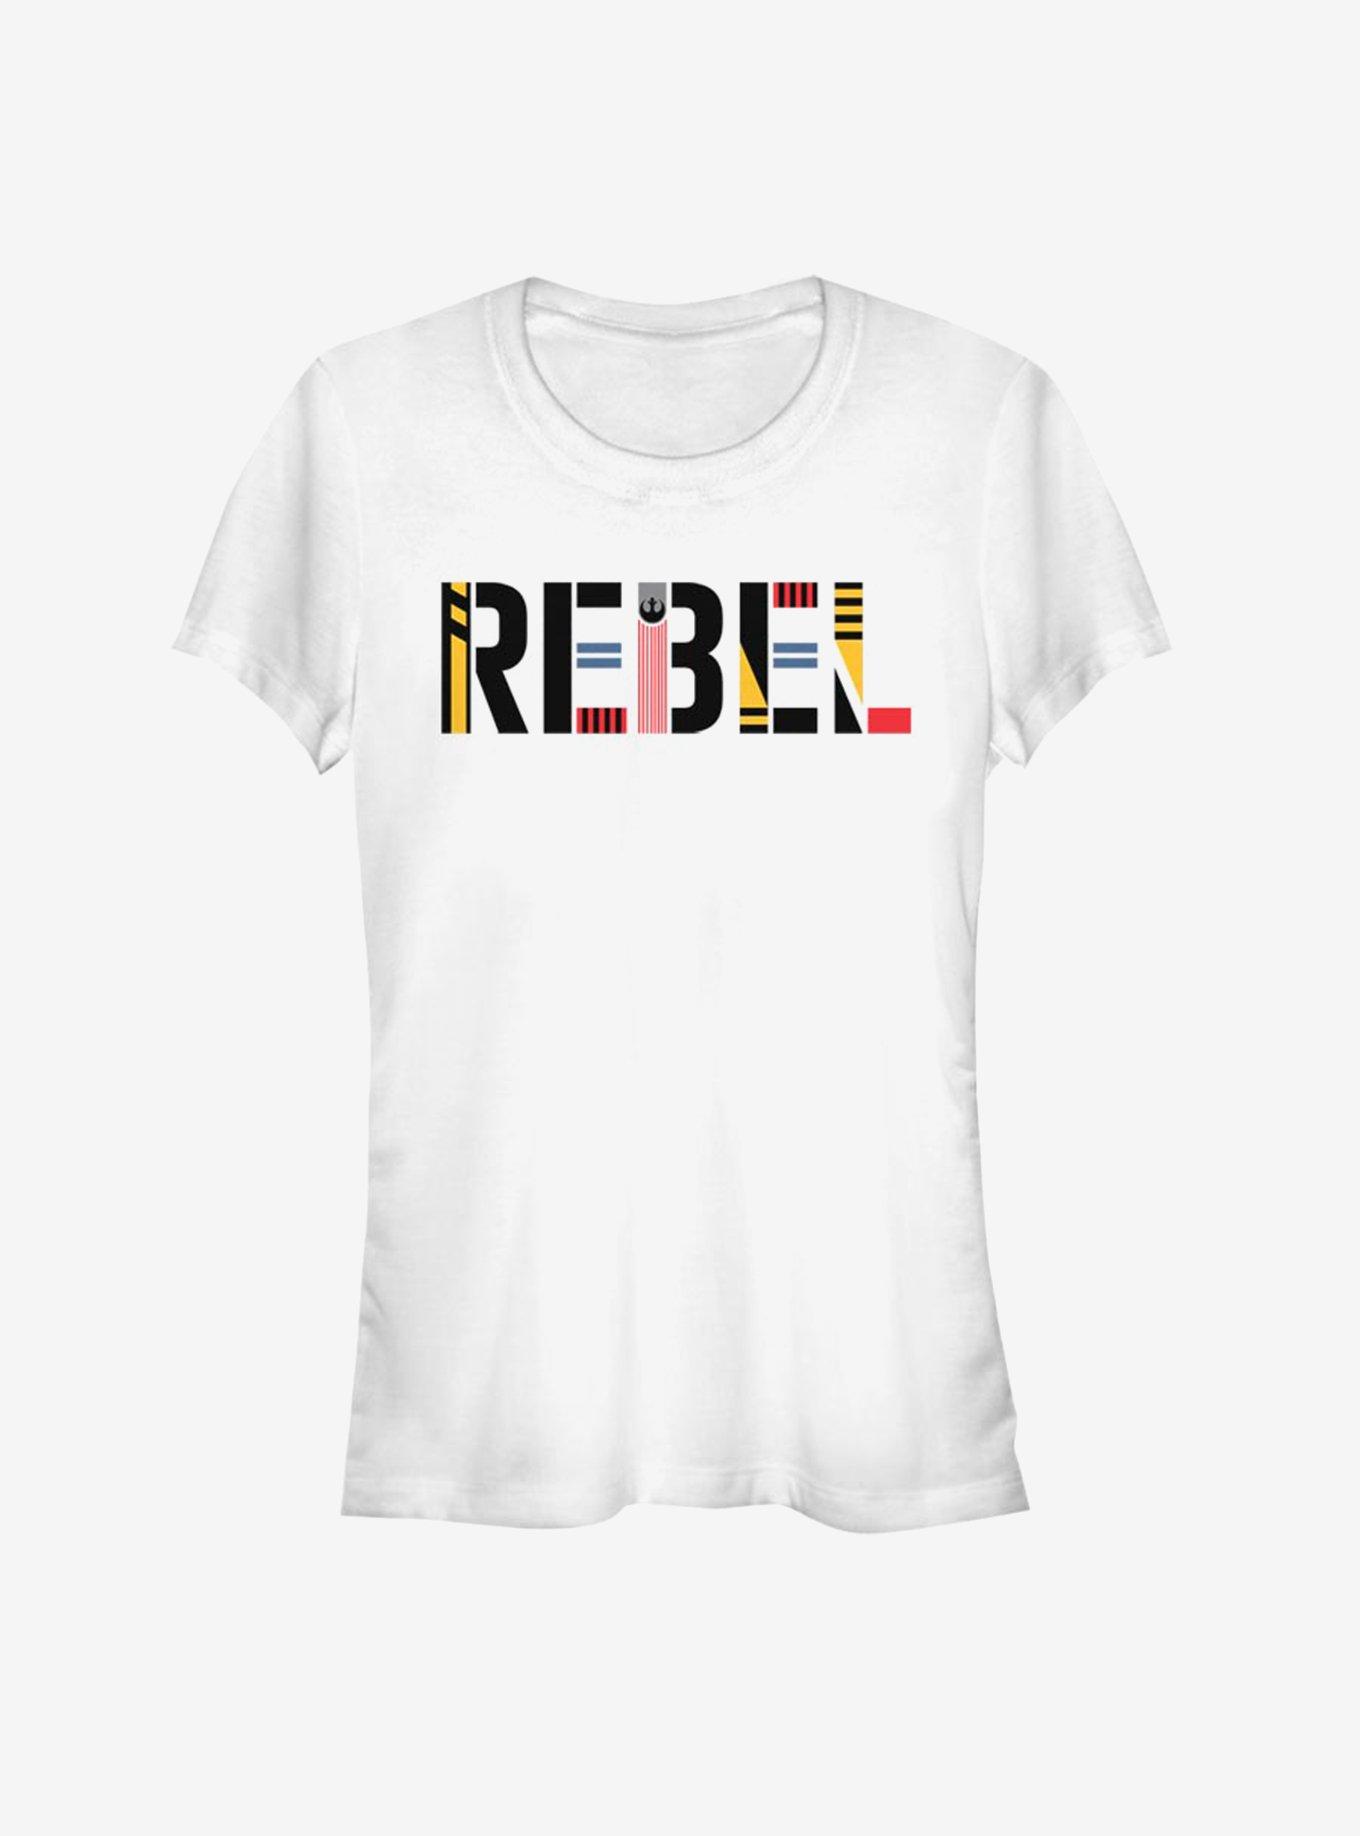 Star Wars: The Rise of Skywalker Rebel Simple Girls T-Shirt, WHITE, hi-res